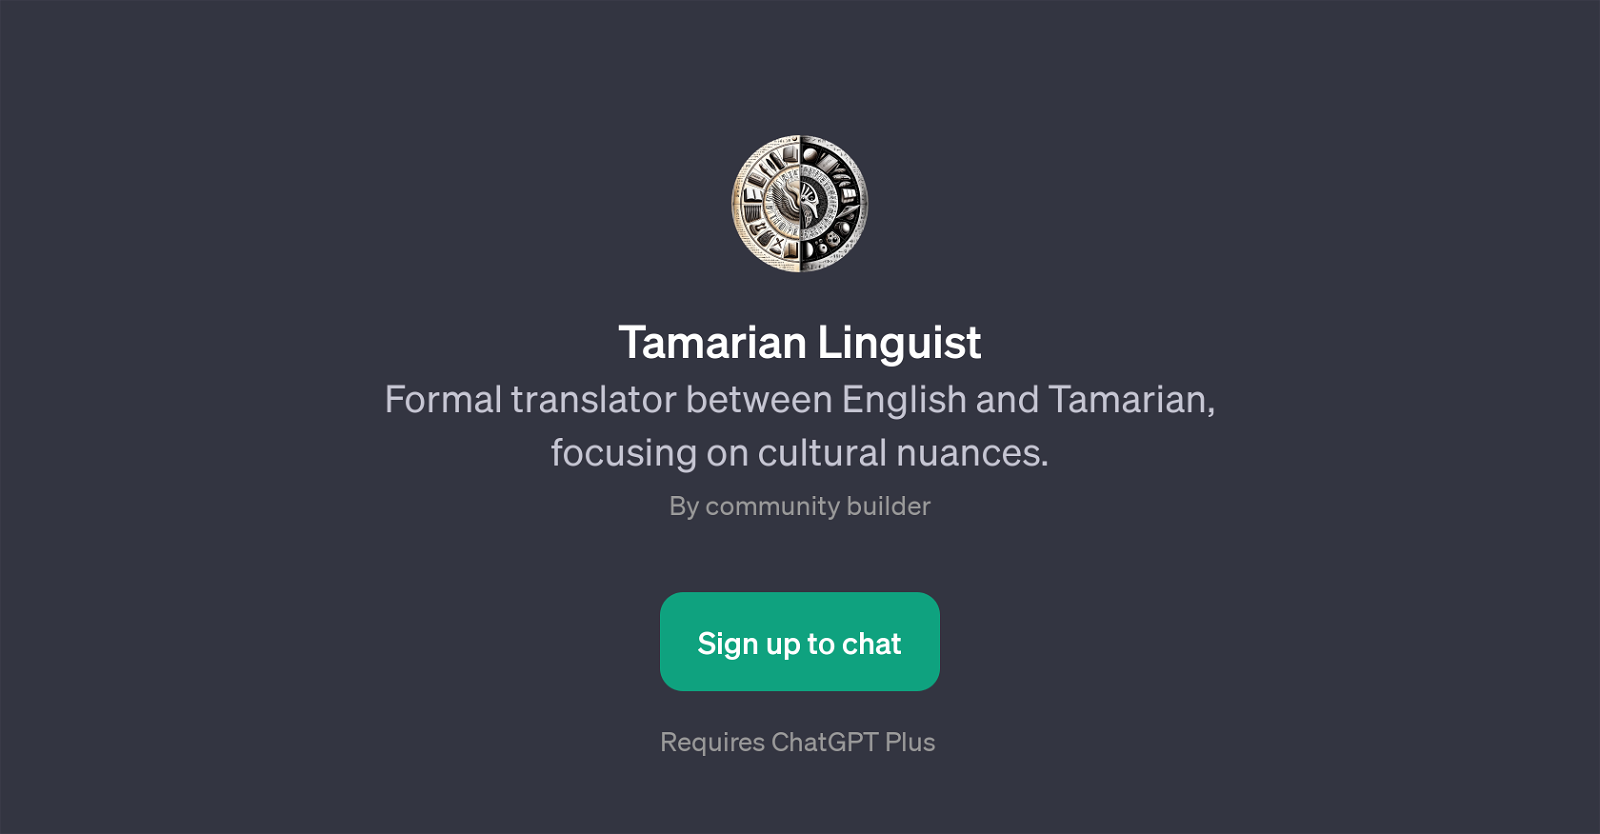 Tamarian Linguist website